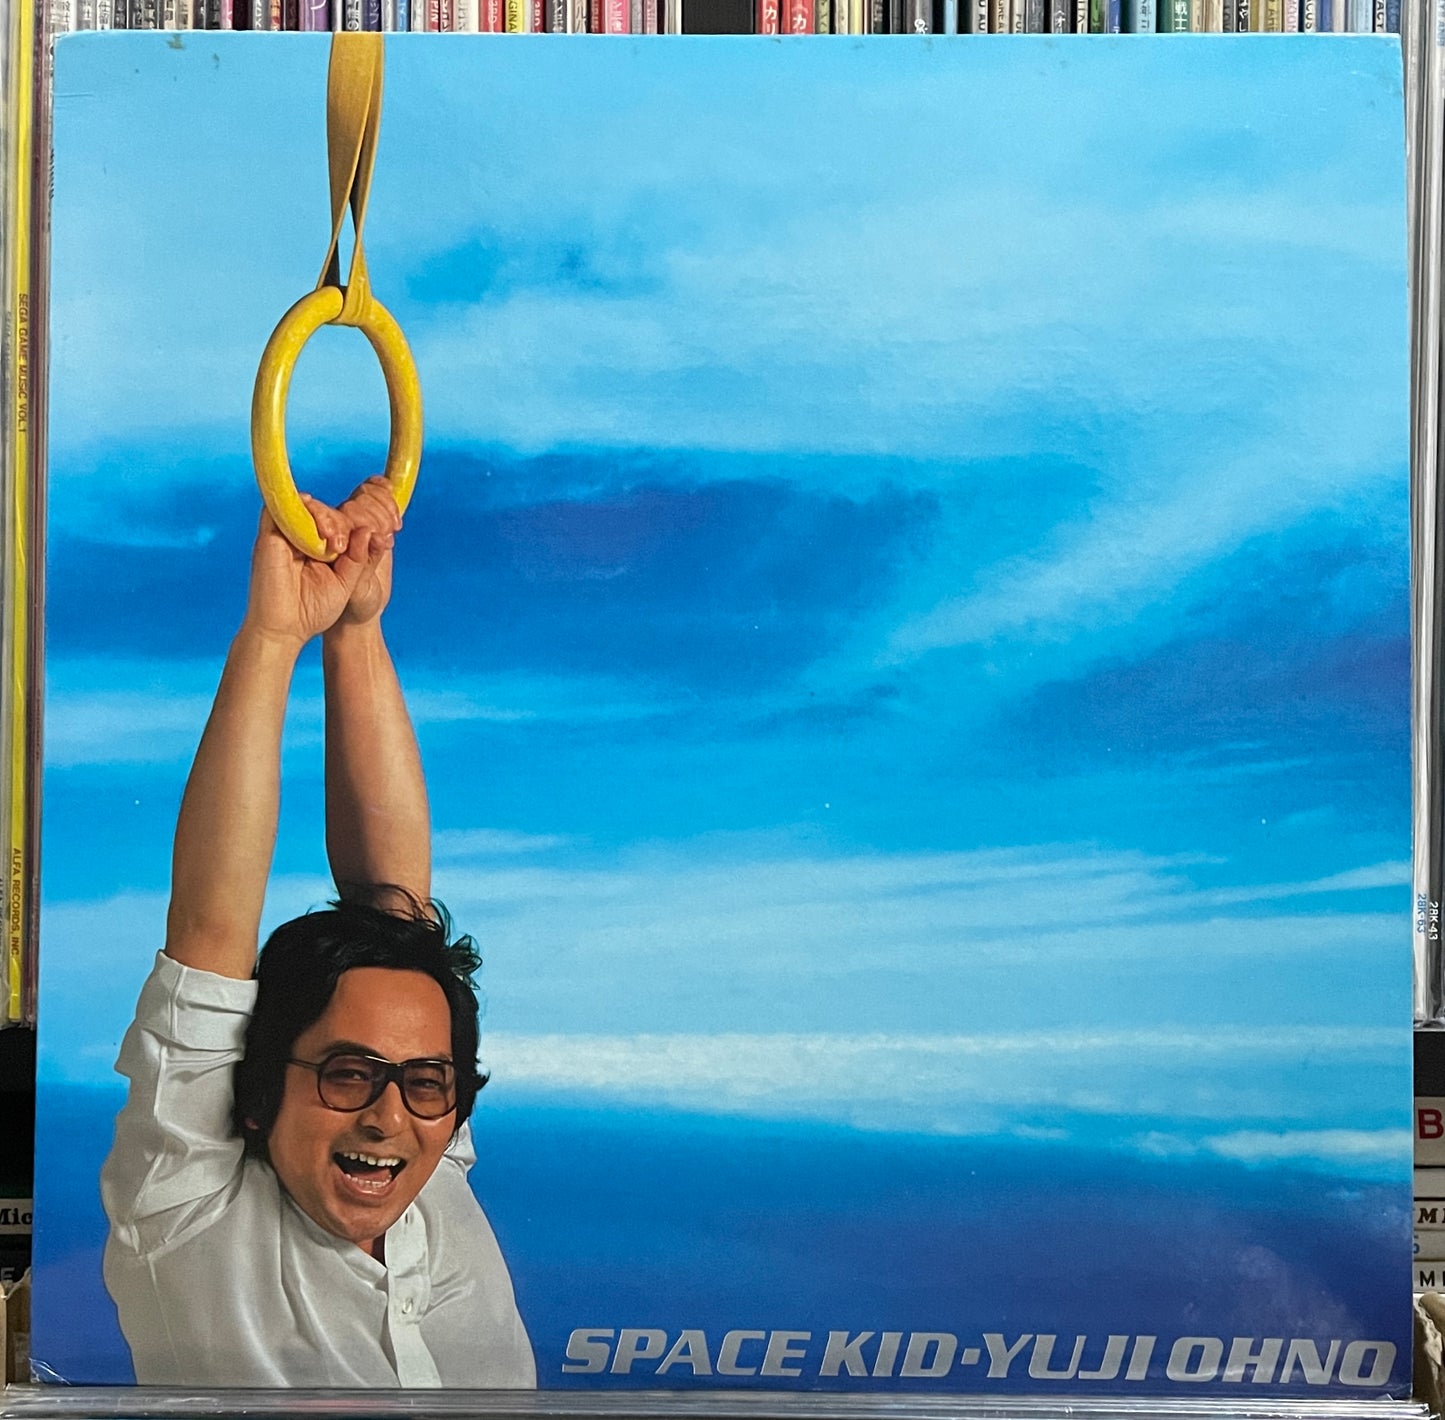 Yuji Ohno “Space Kid” (1978)